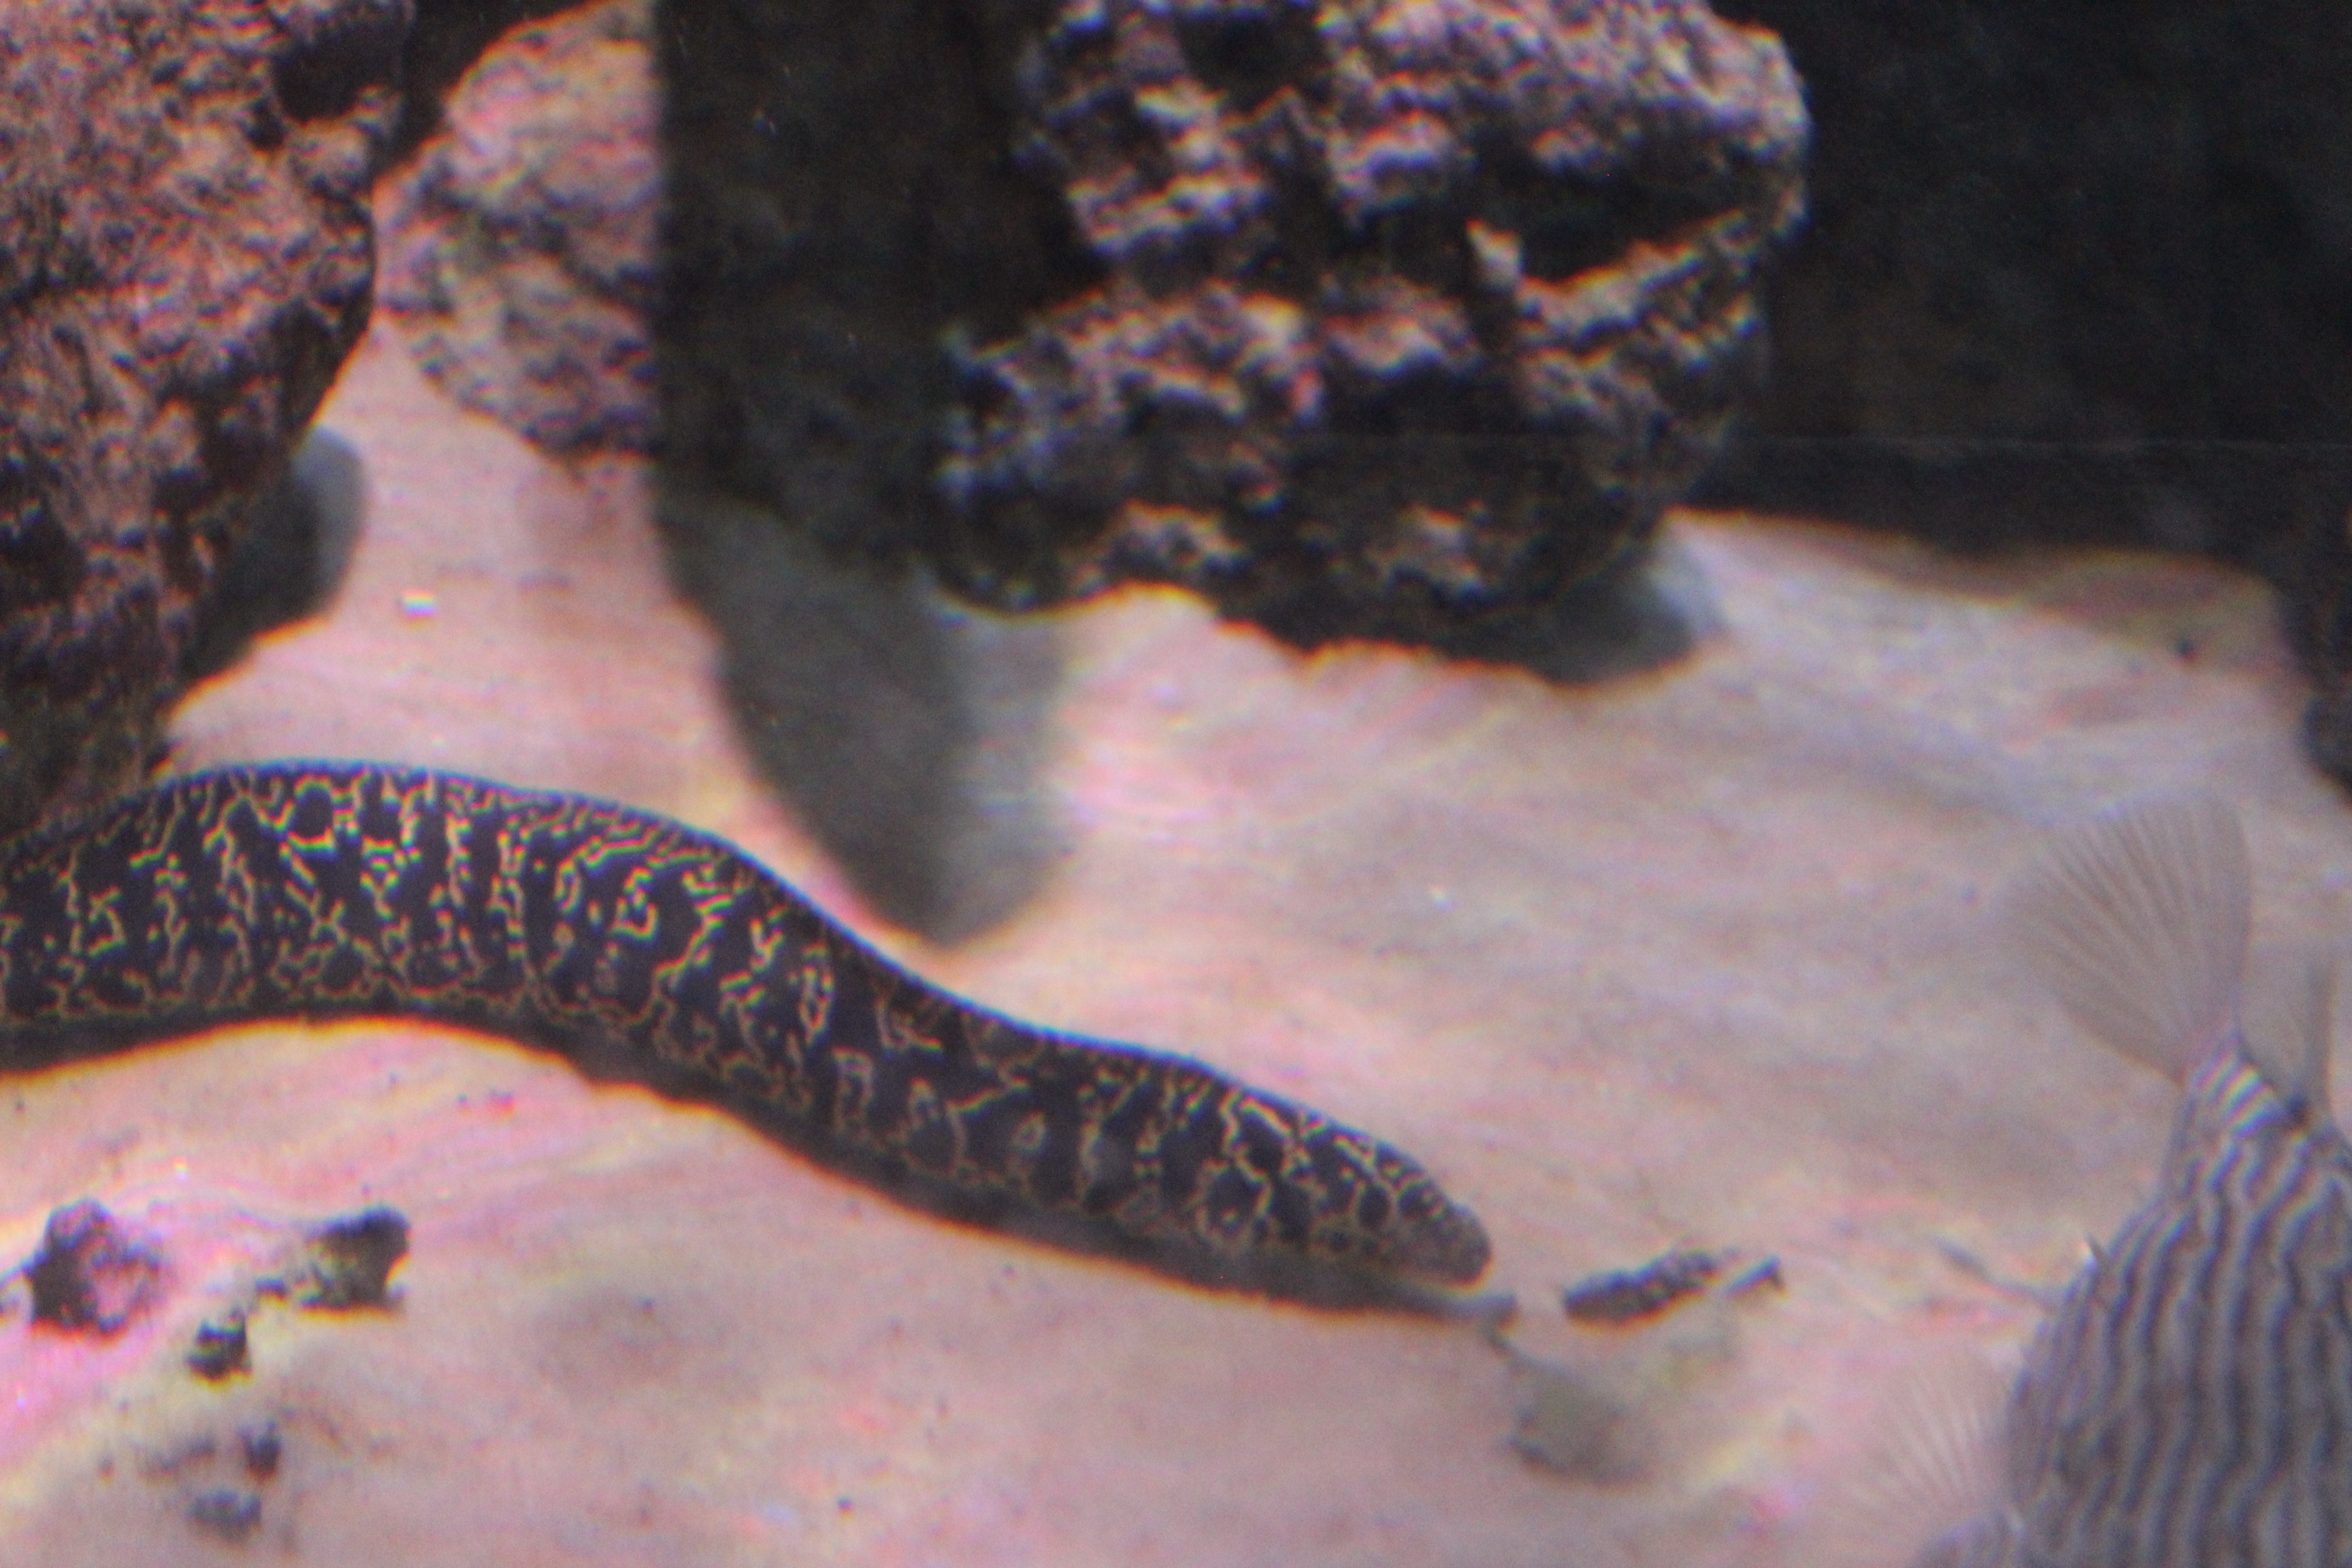 Chain Moray Eel